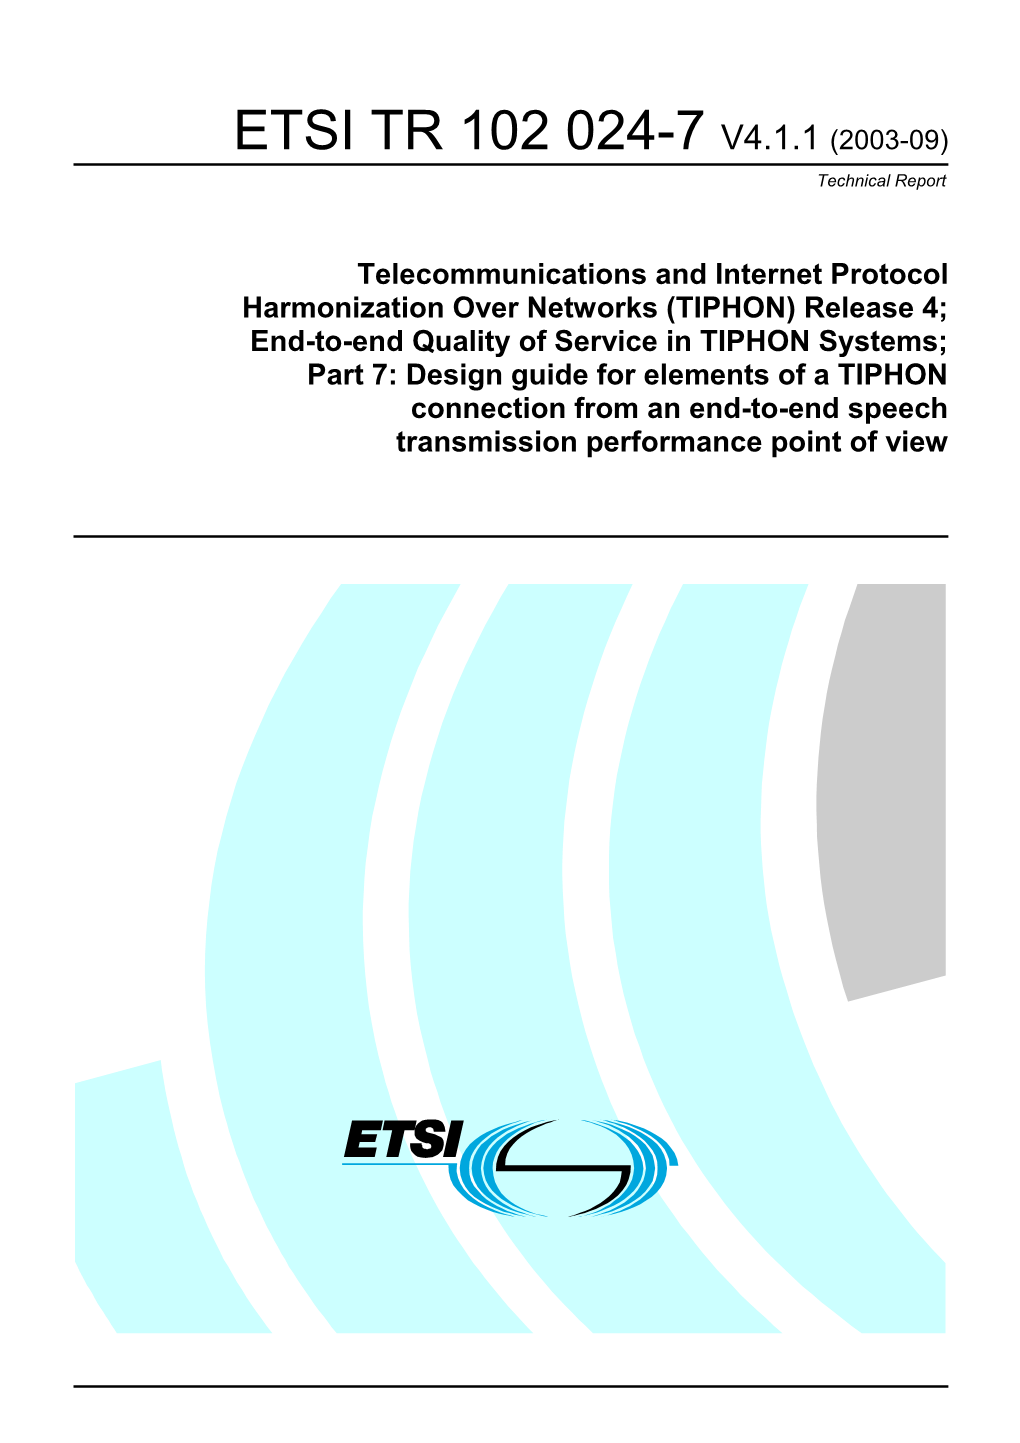 TR 102 024-7 V4.1.1 (2003-09) Technical Report